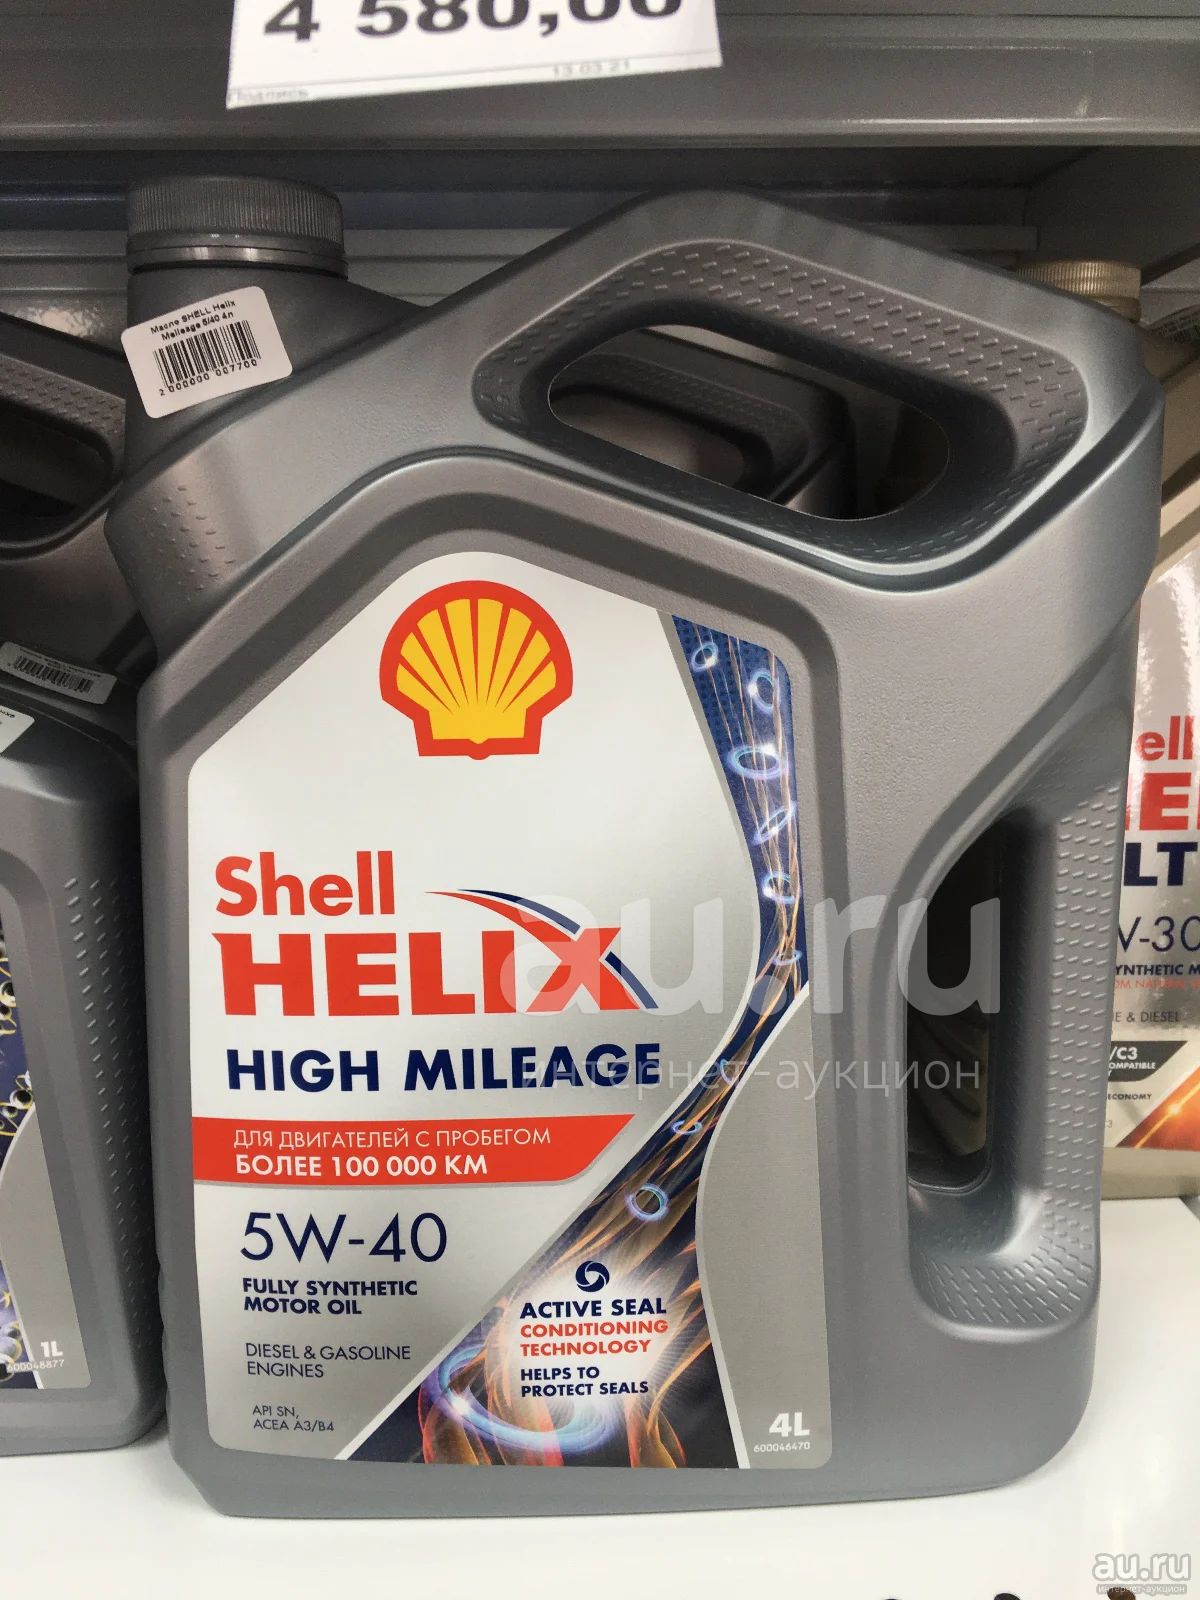 High mileage 5w 40. Shell Helix Mileage.